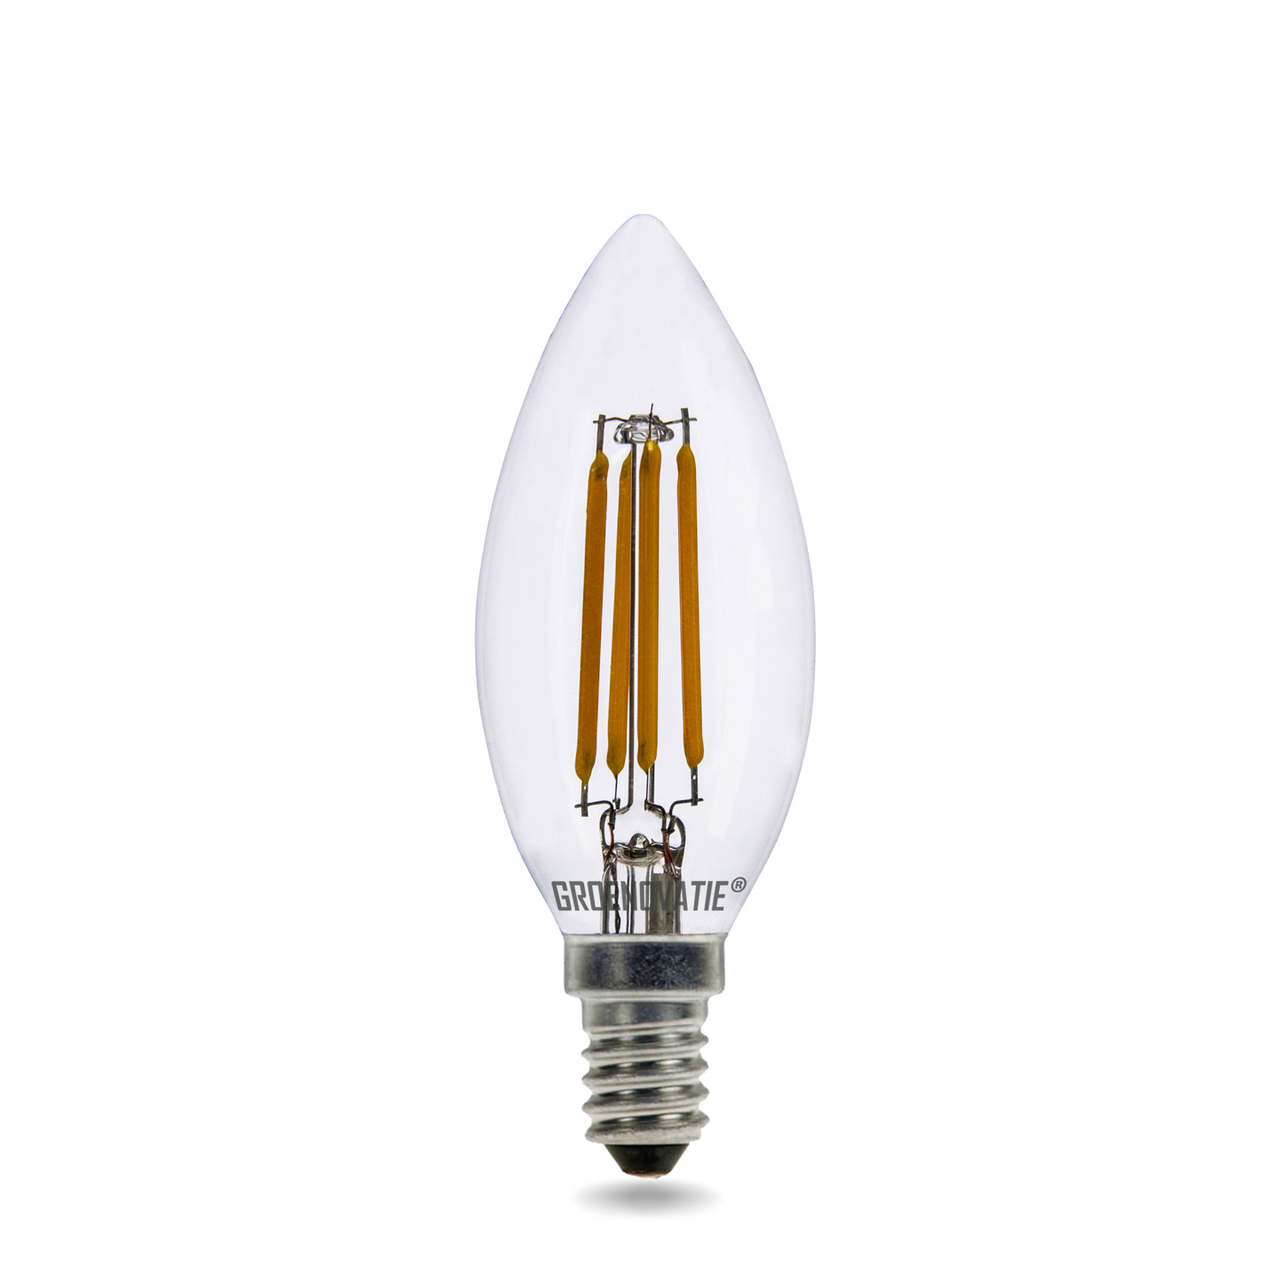 Auckland tofu Betsy Trotwood E14 LED Filament Kaarslamp 4W Dimbaar - LEDlampen kopen